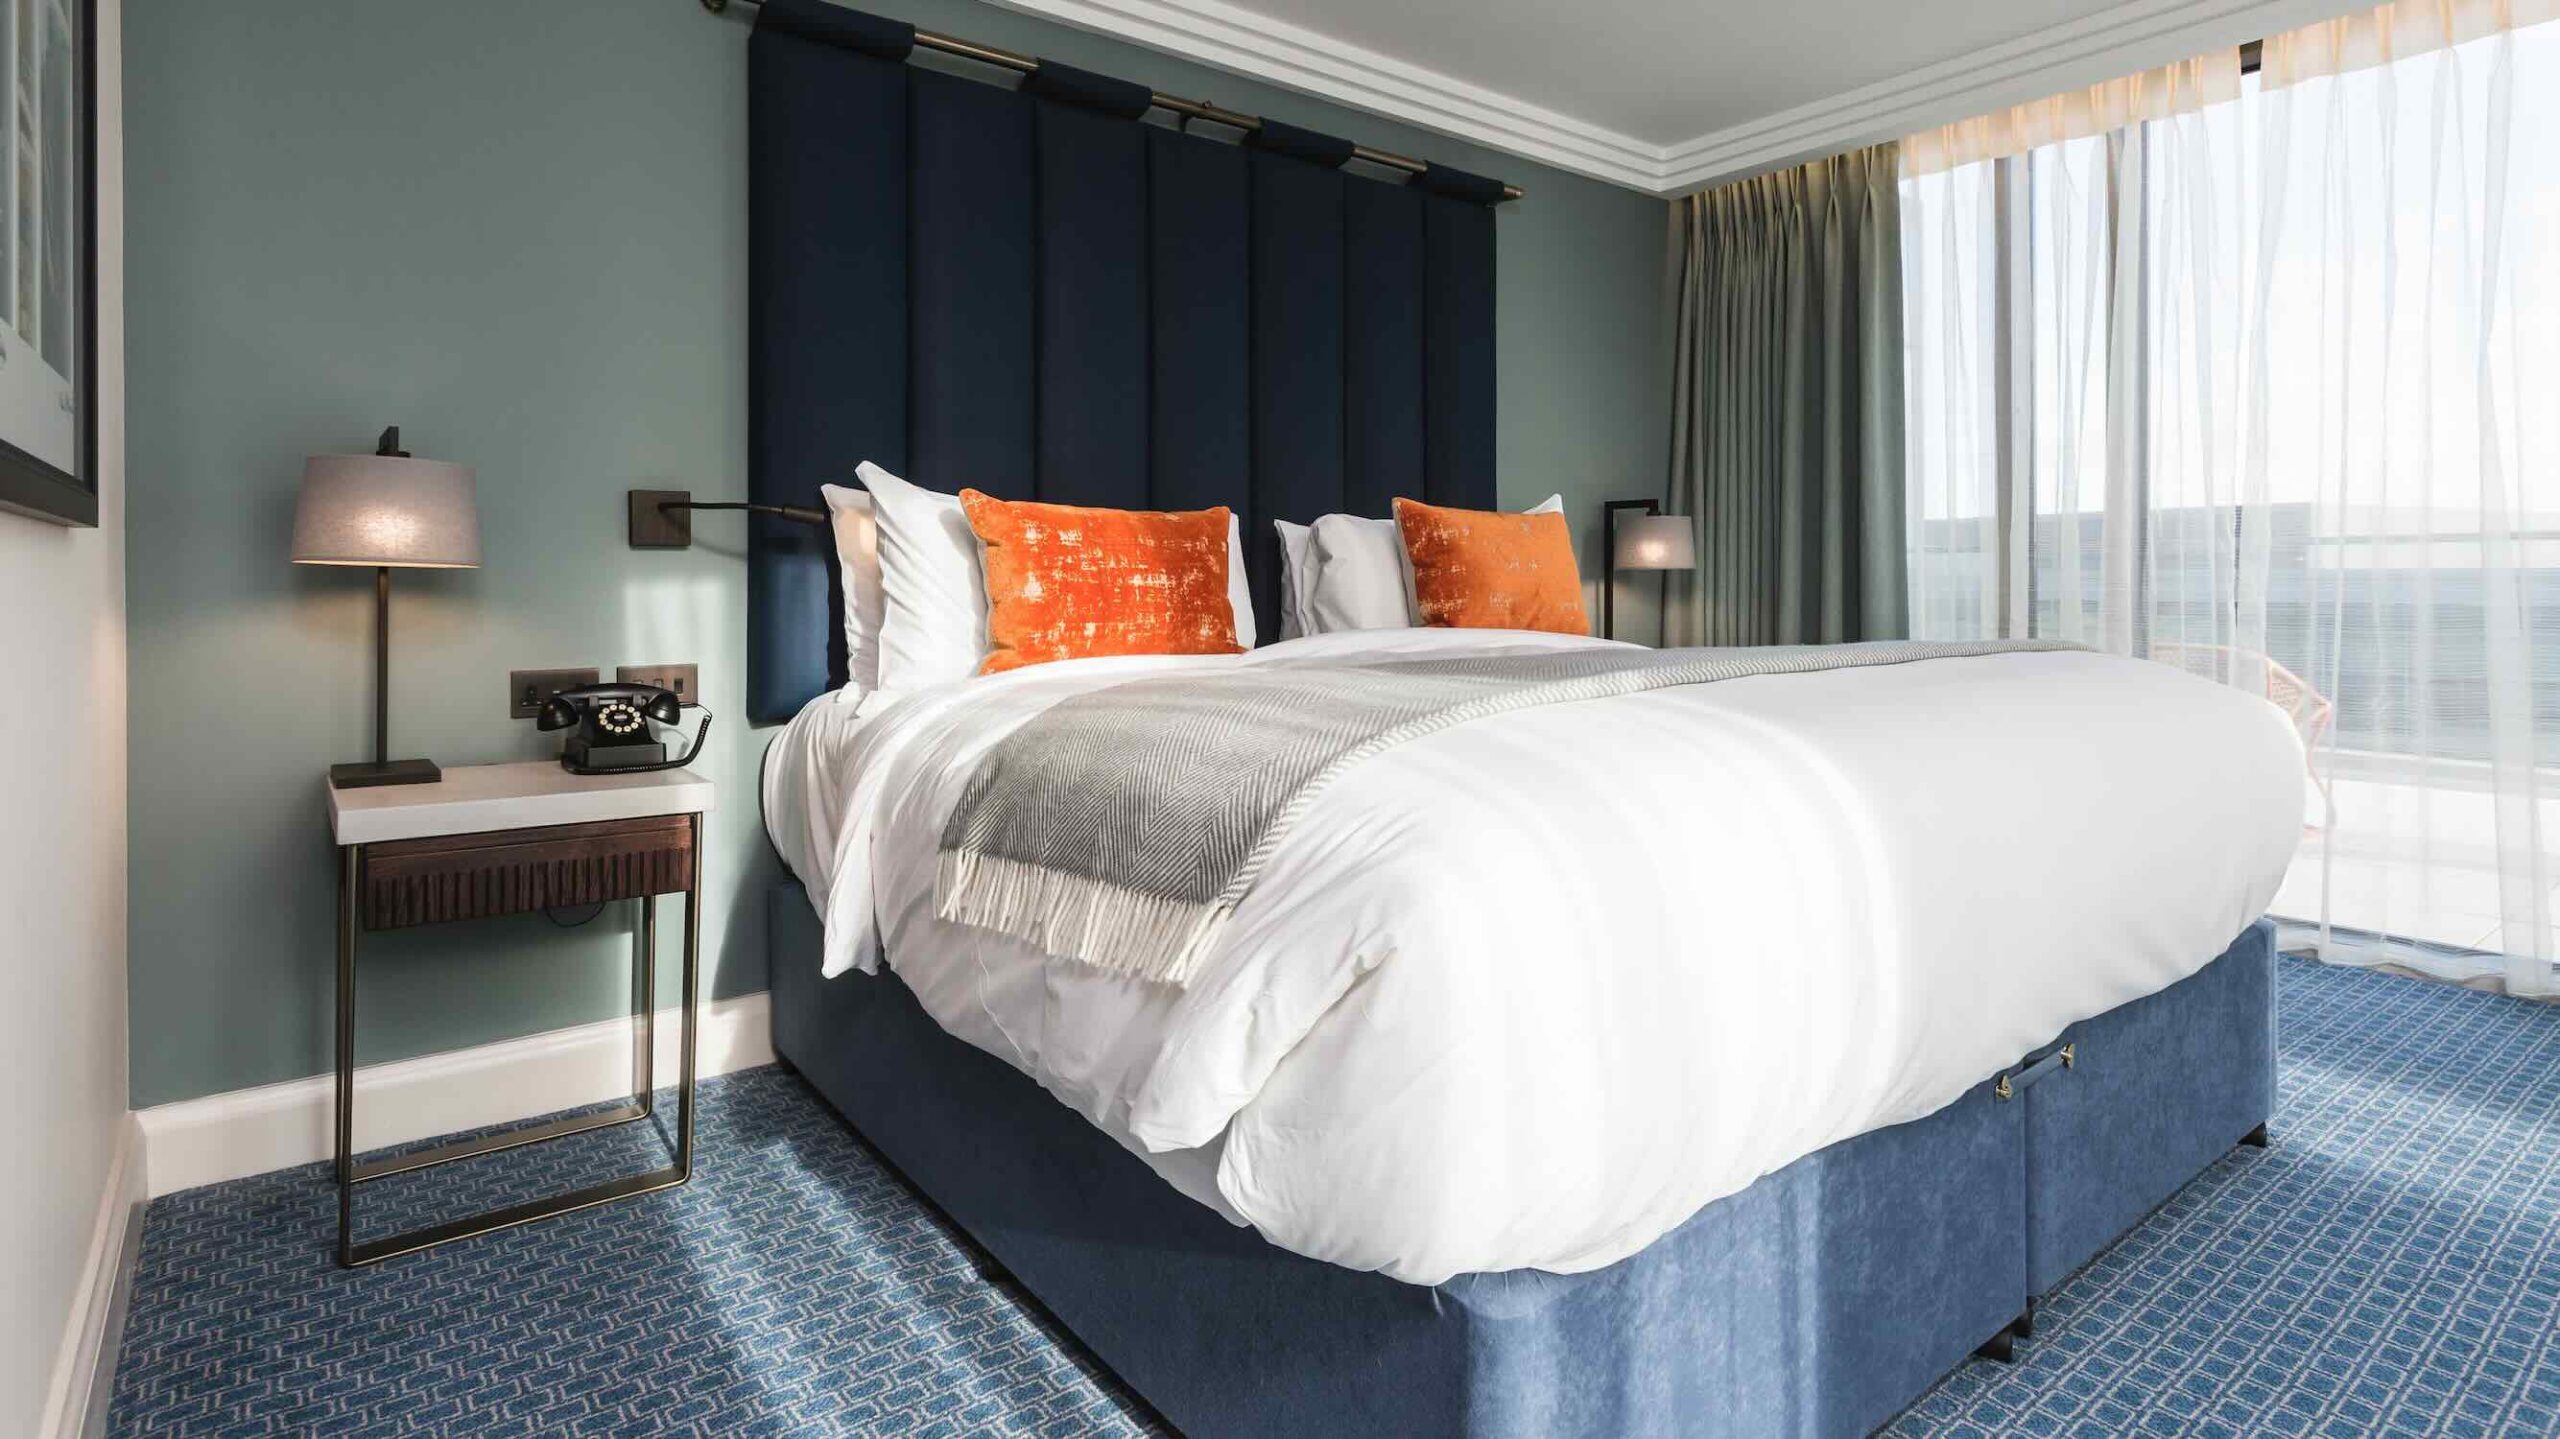 Clayton Hotel Cambridge is one of the best luxury hotels in Cambridge bedroom